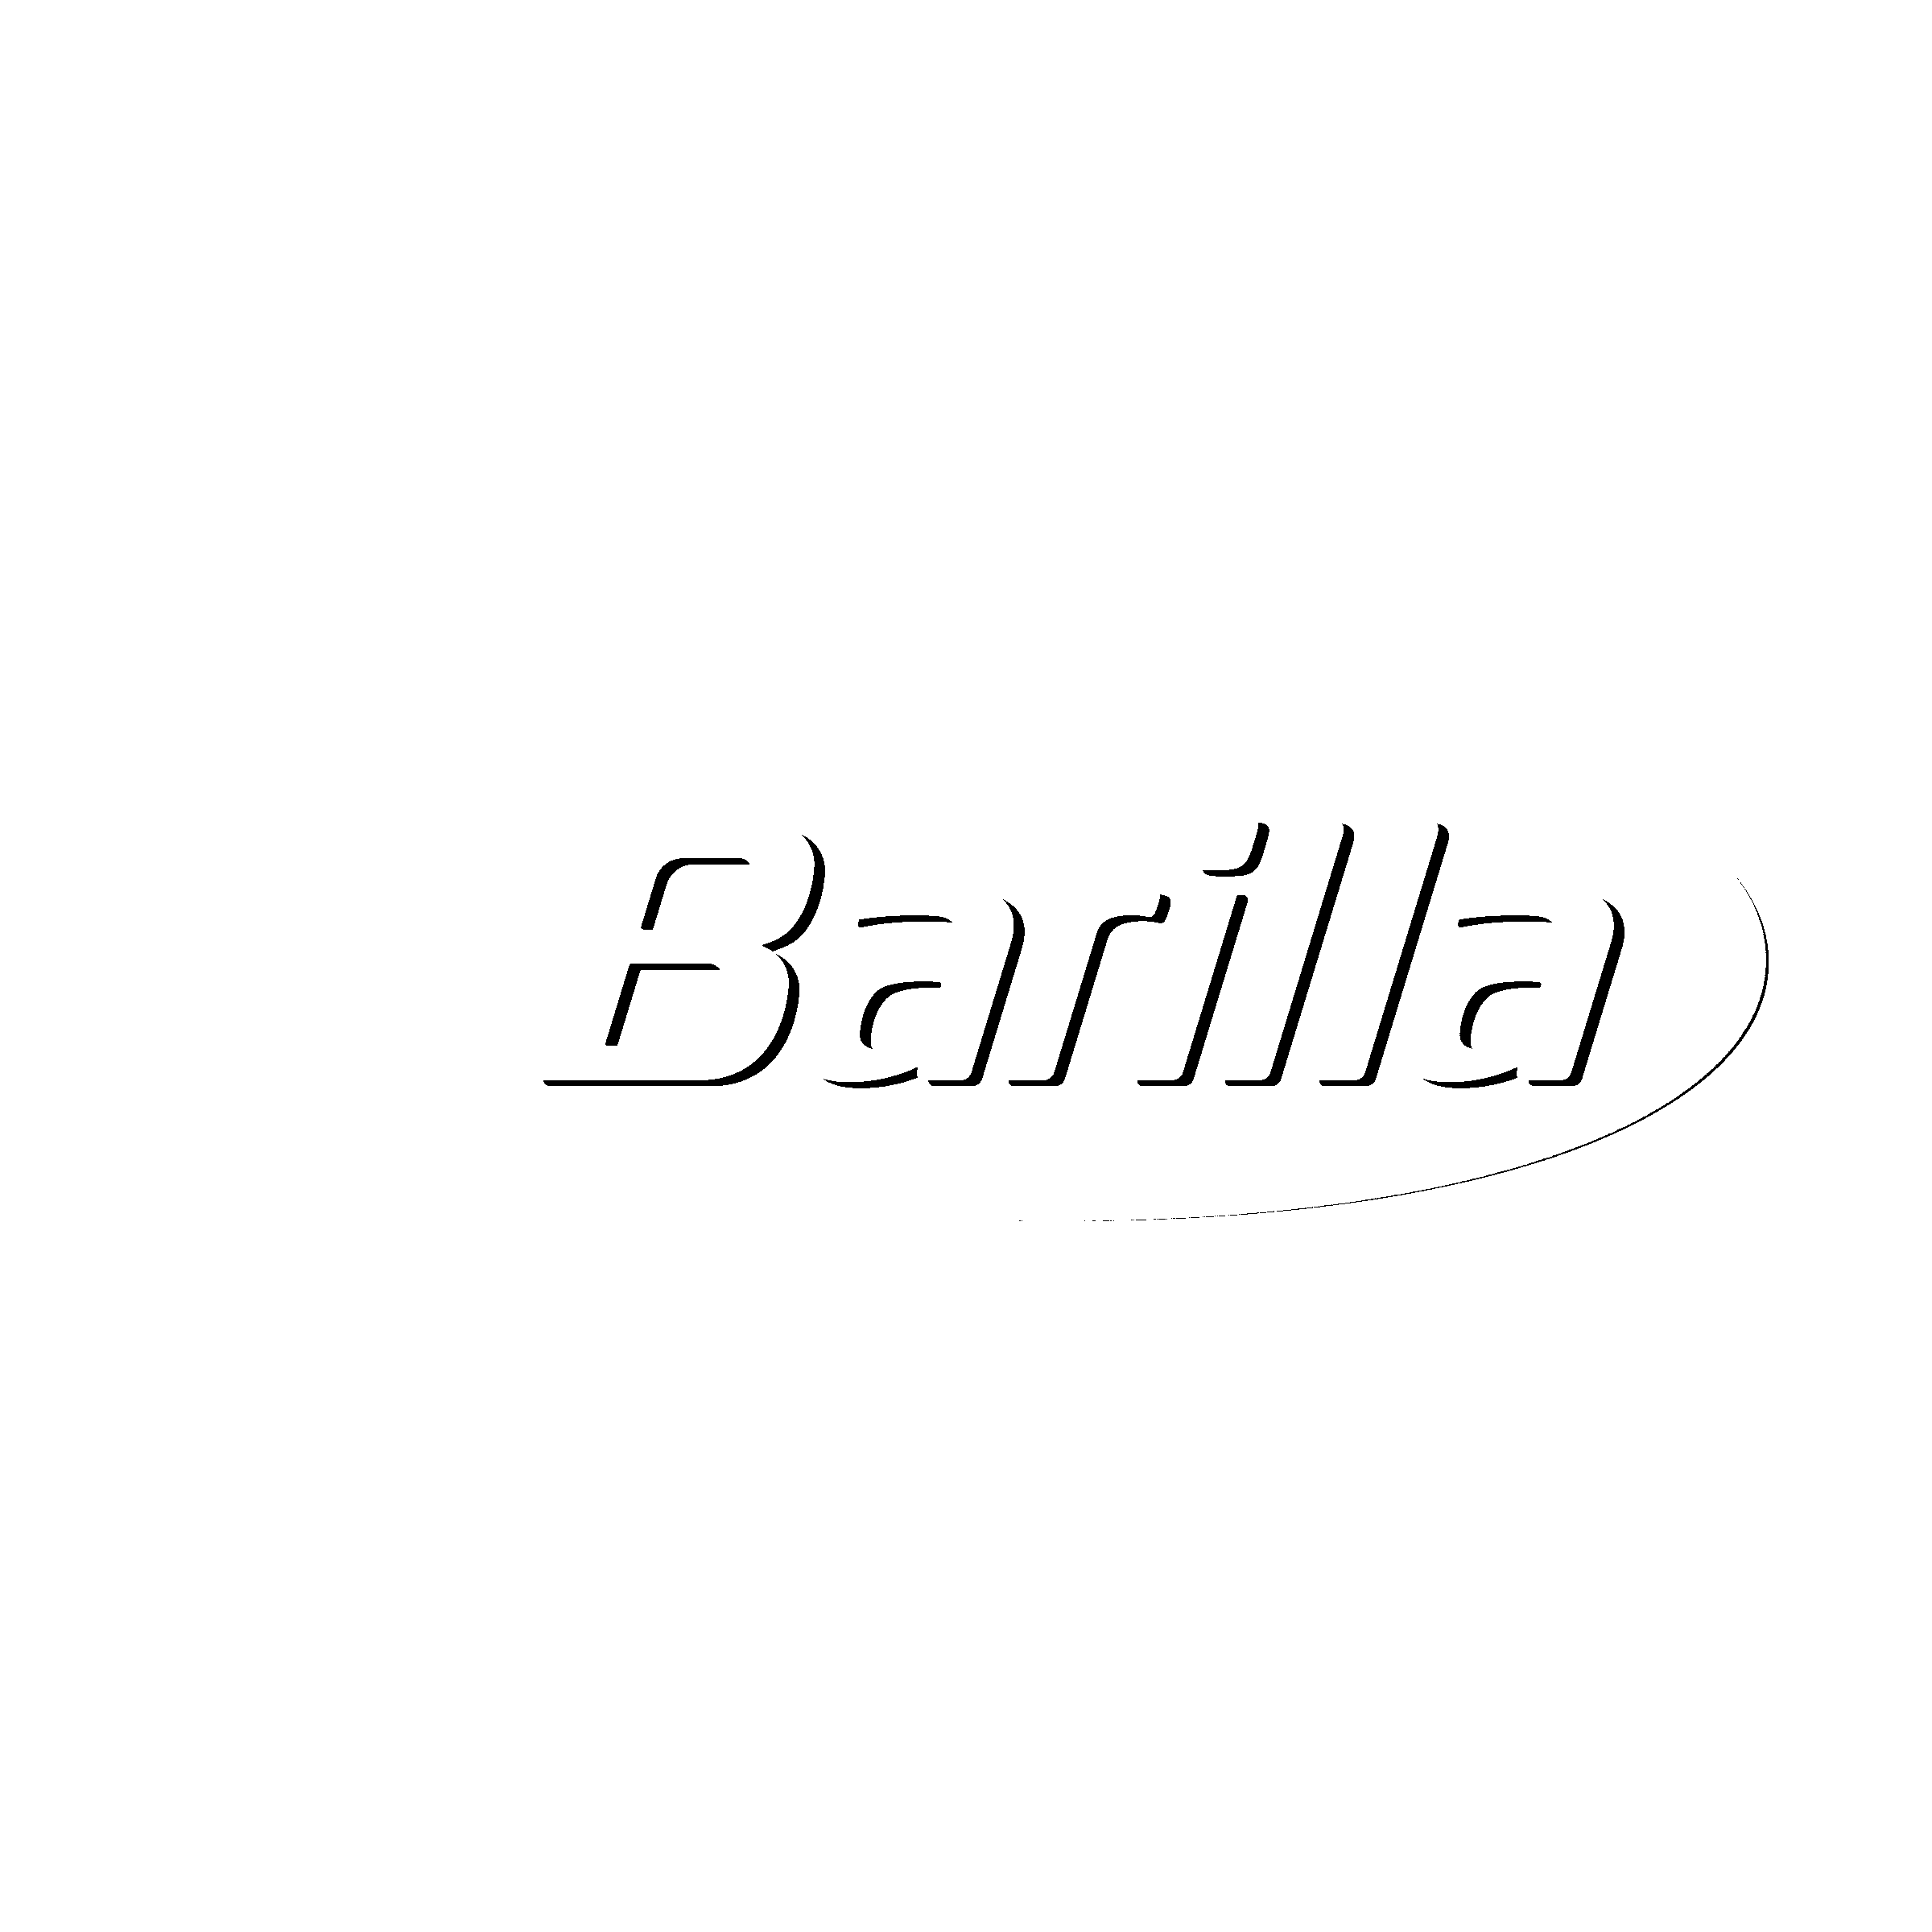 Barilla Logo - Barilla Logo PNG Transparent & SVG Vector - Freebie Supply